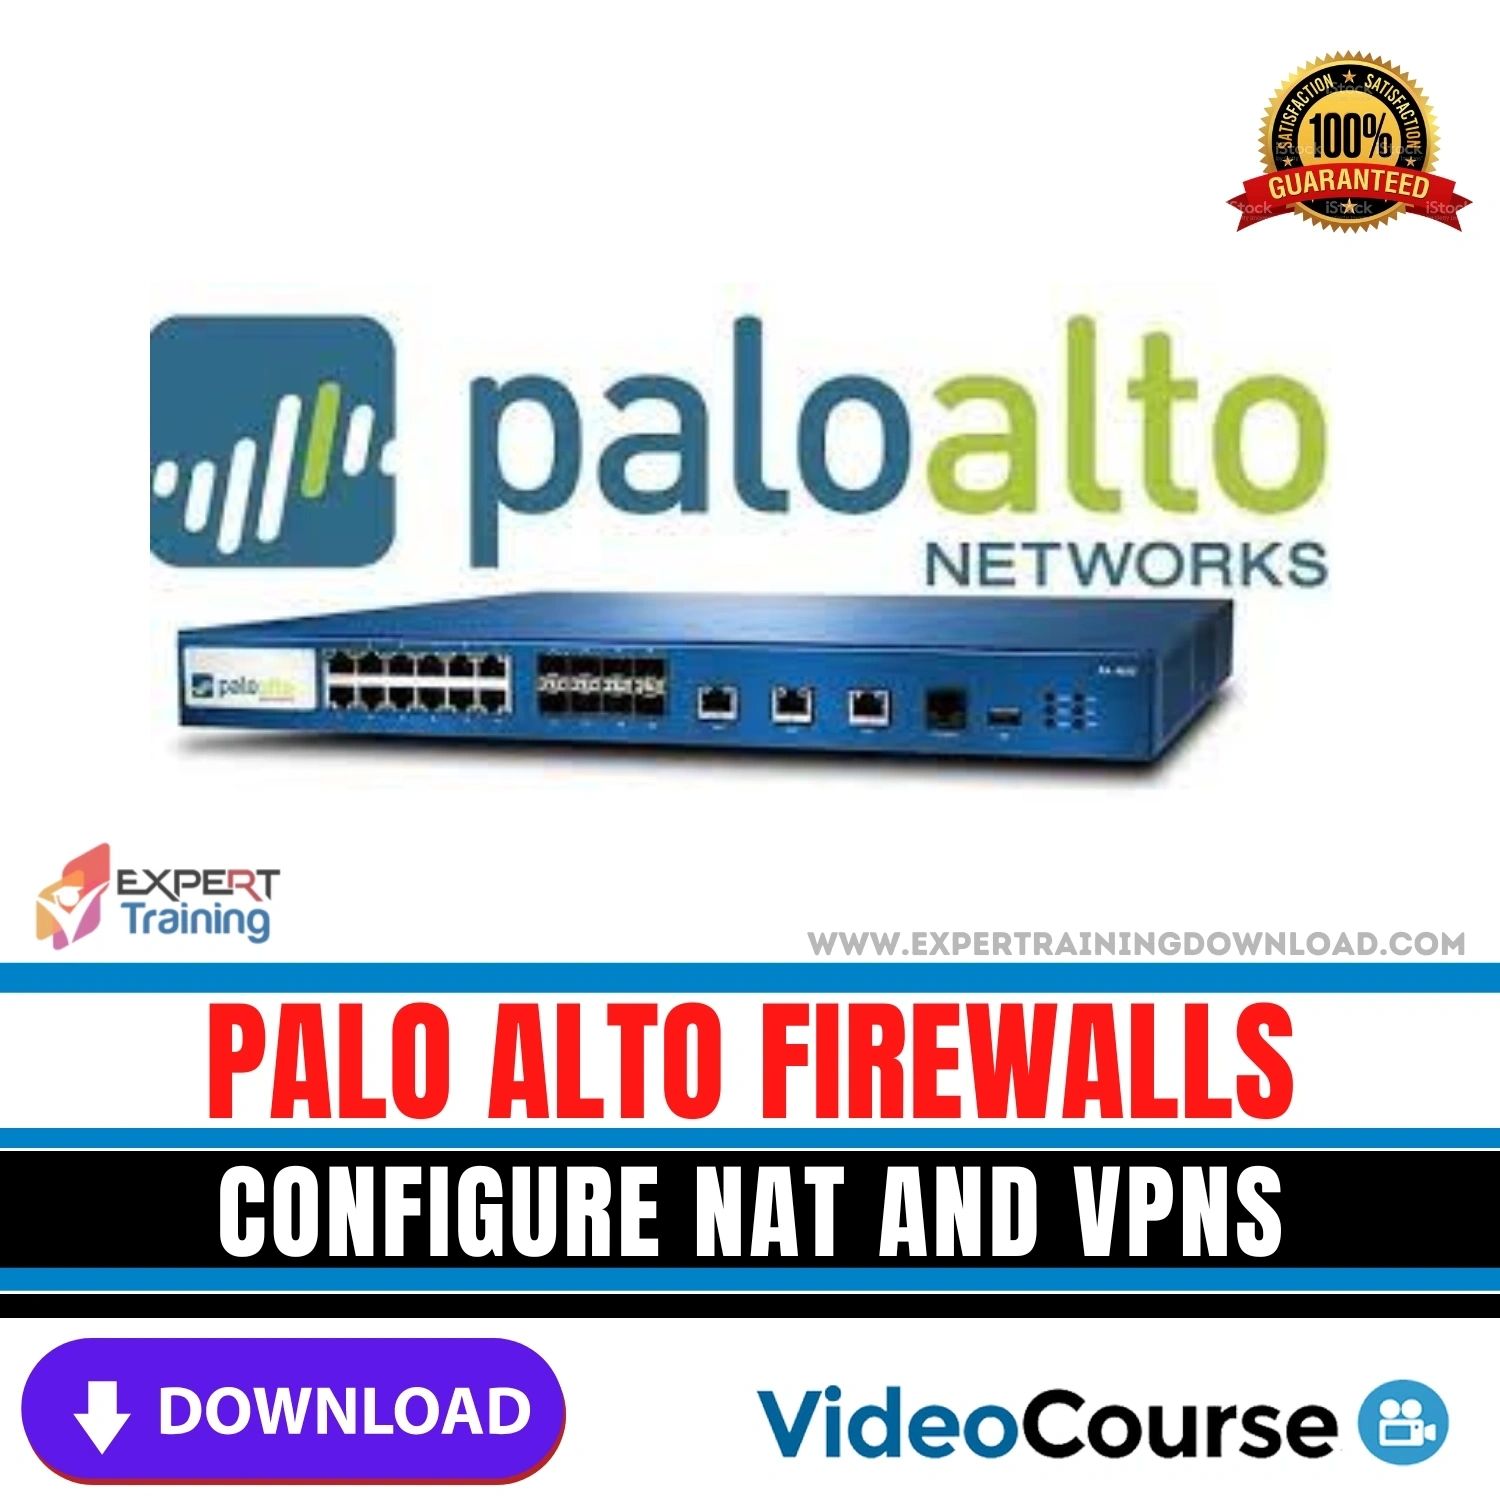 Configure NAT and VPNs Using Palo Alto Firewalls